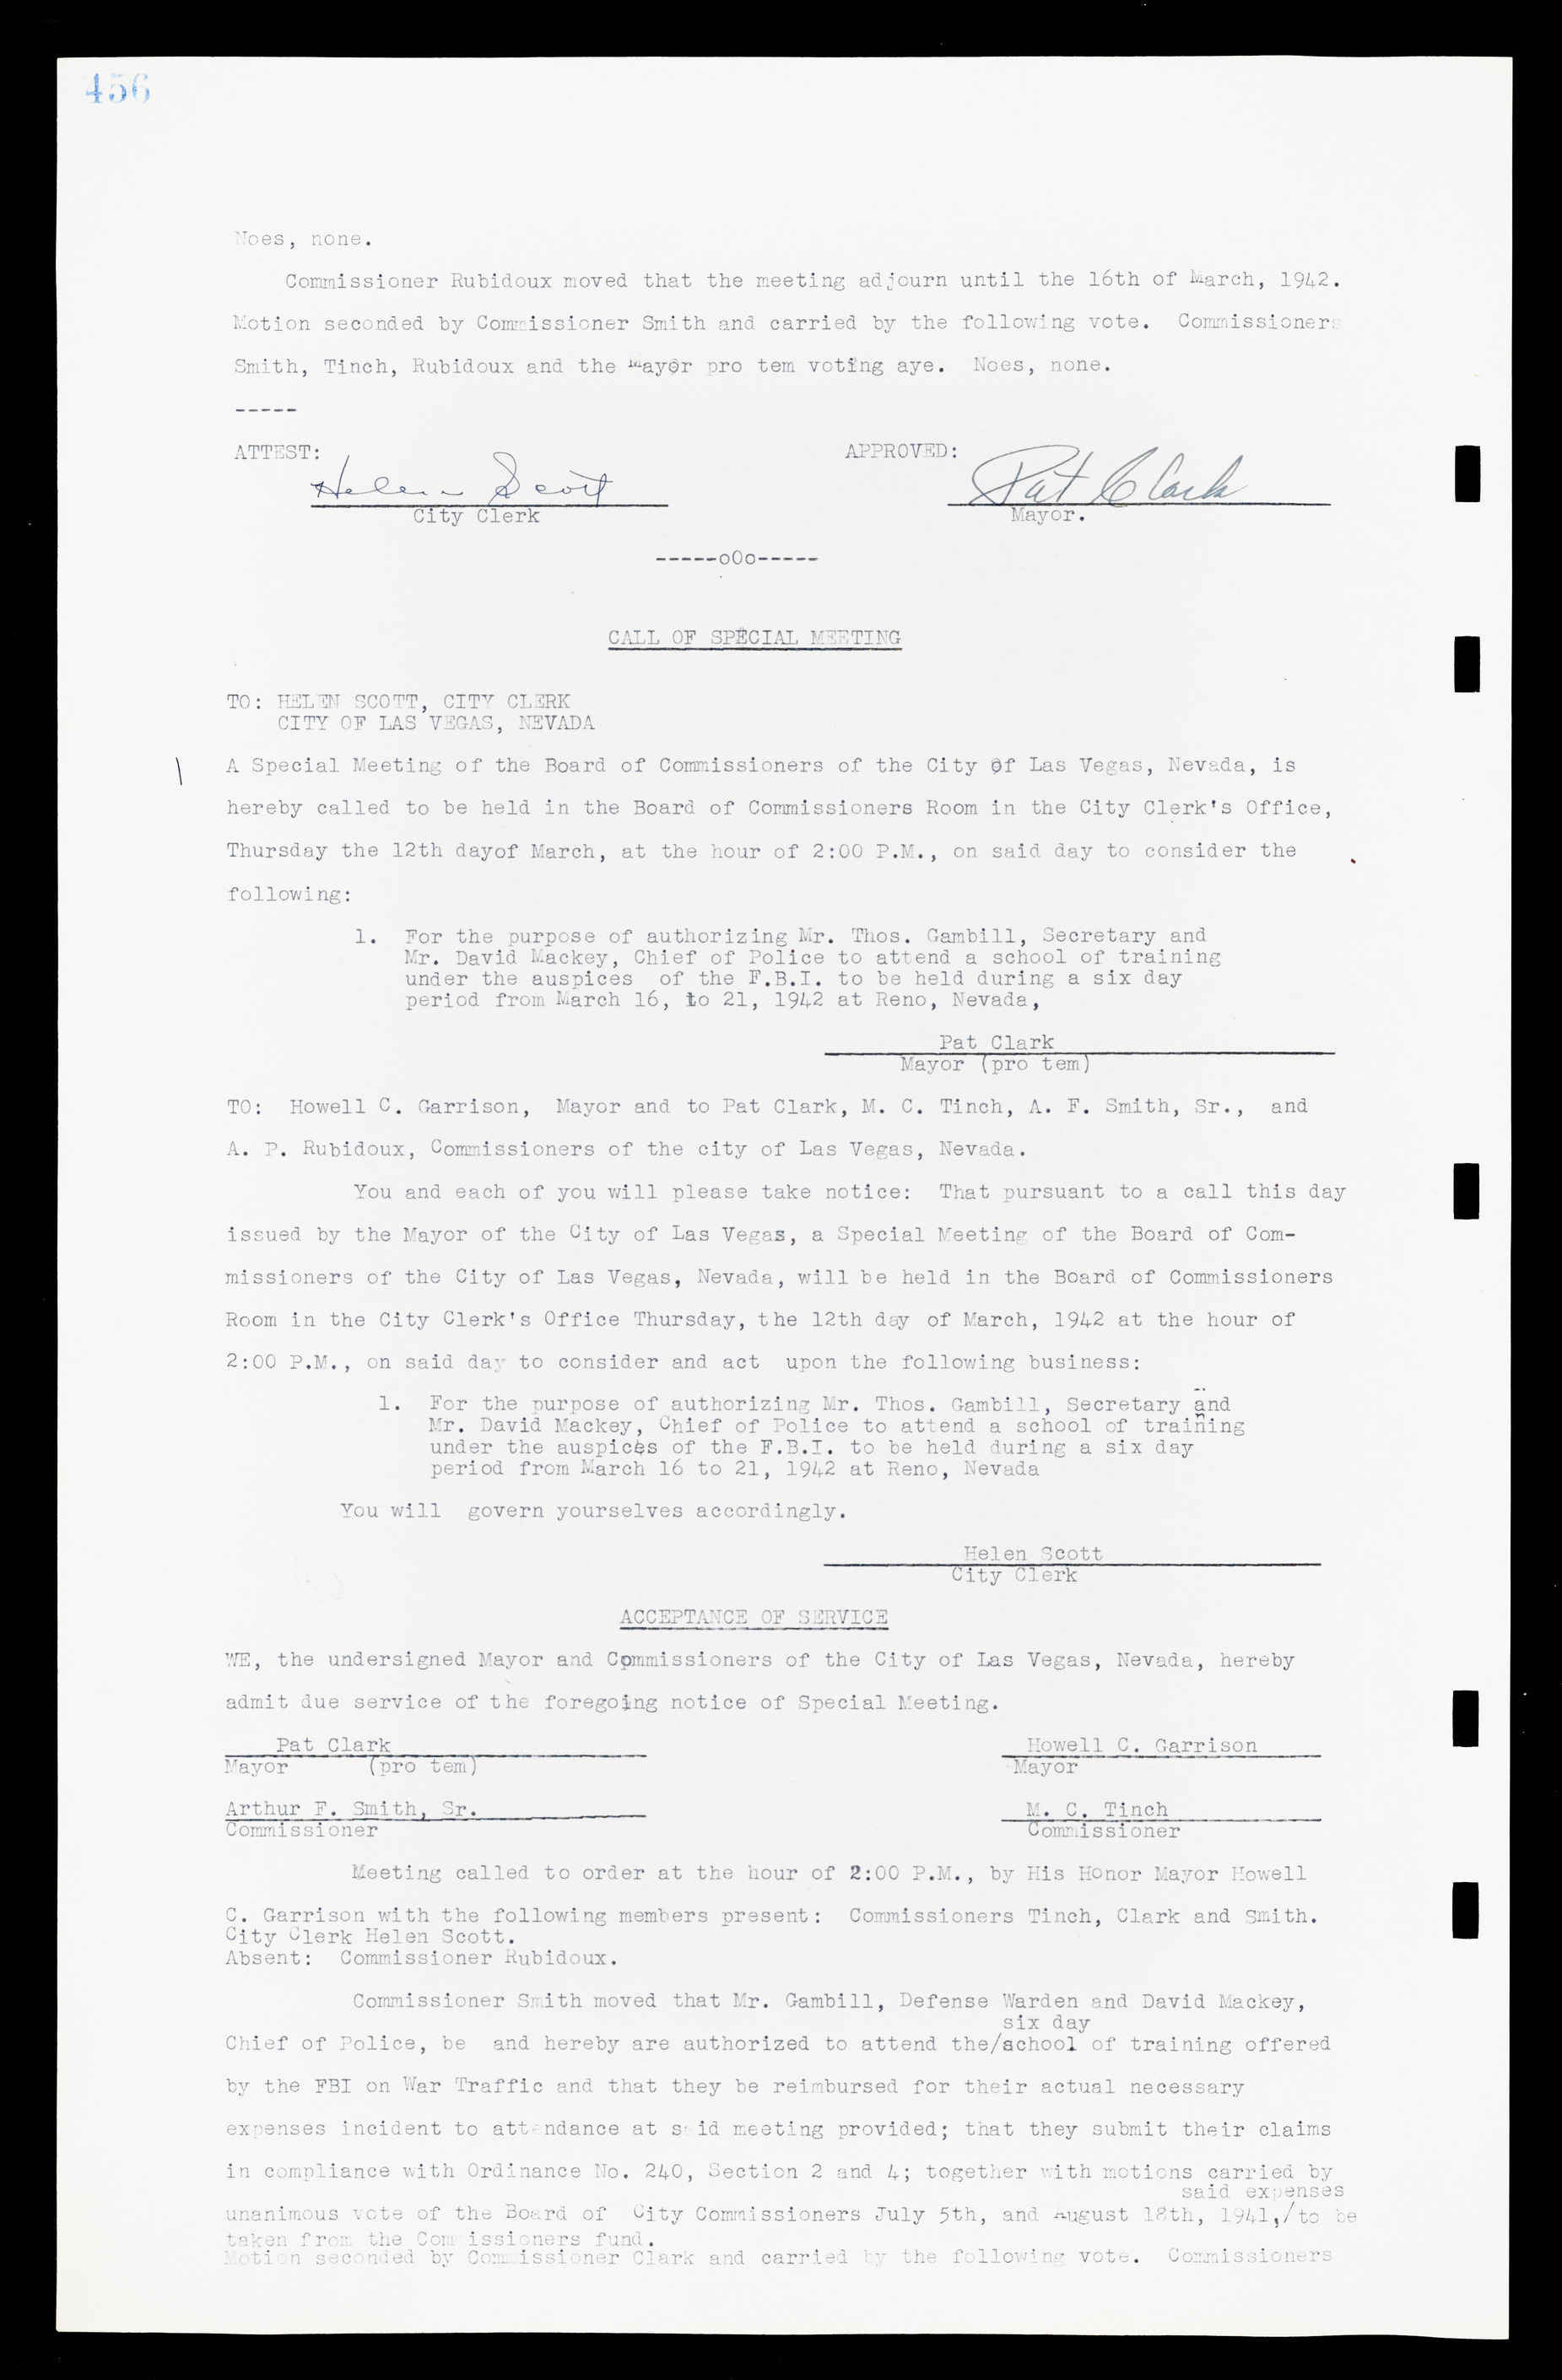 Las Vegas City Commission Minutes, February 17, 1937 to August 4, 1942, lvc000004-484